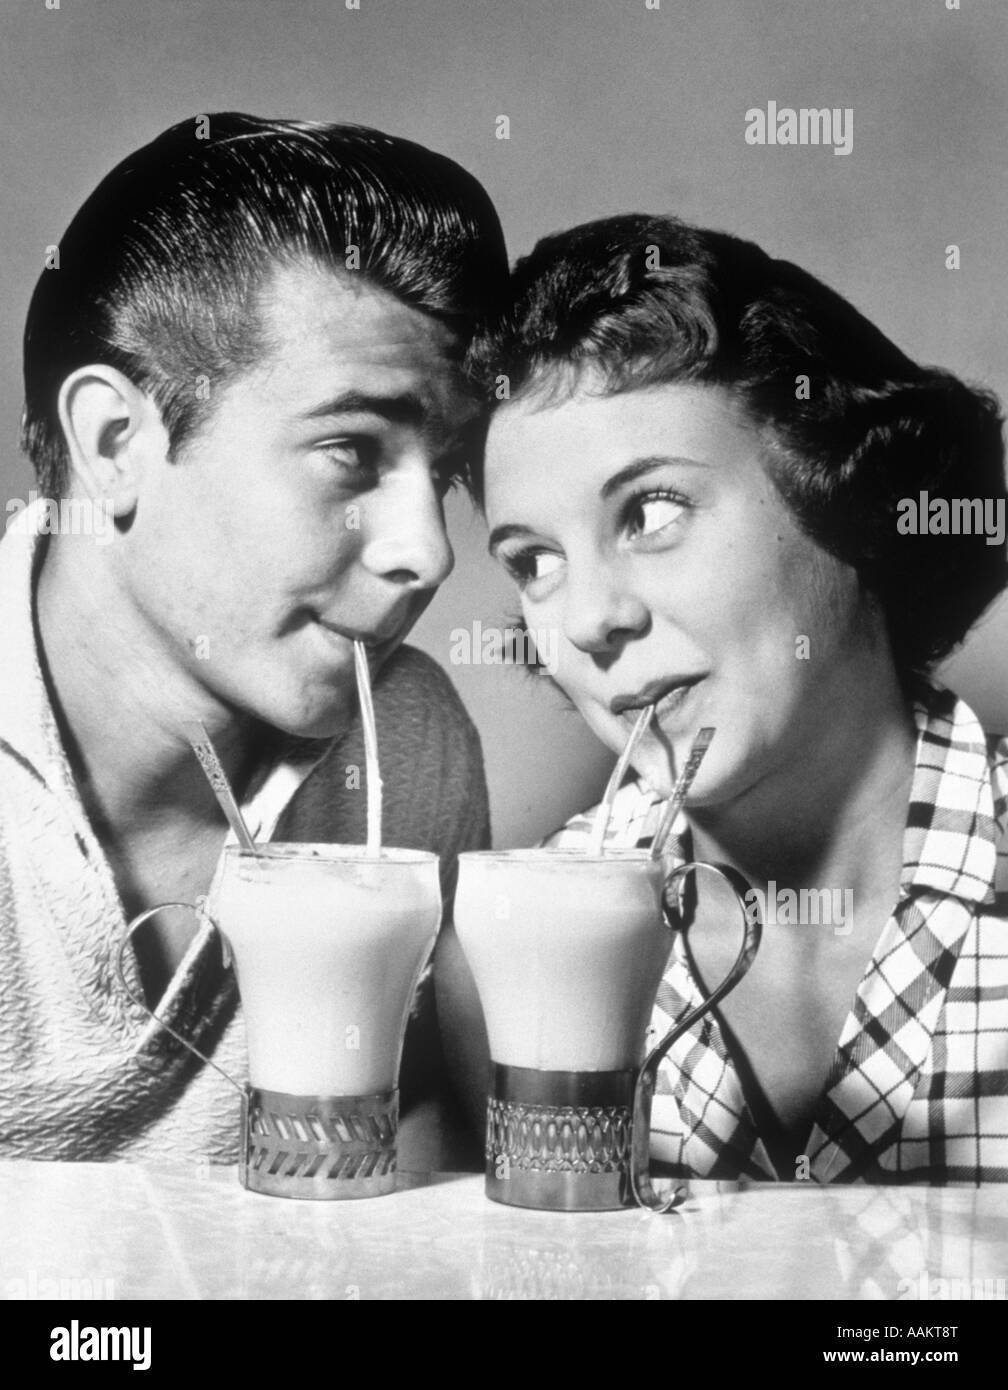 1940s 1950s ROMANTIC TEENAGE COUPLE BOY AND GIRL HEAD TO HEAD DRINKING ICE CREAM SODAS Stock Photo